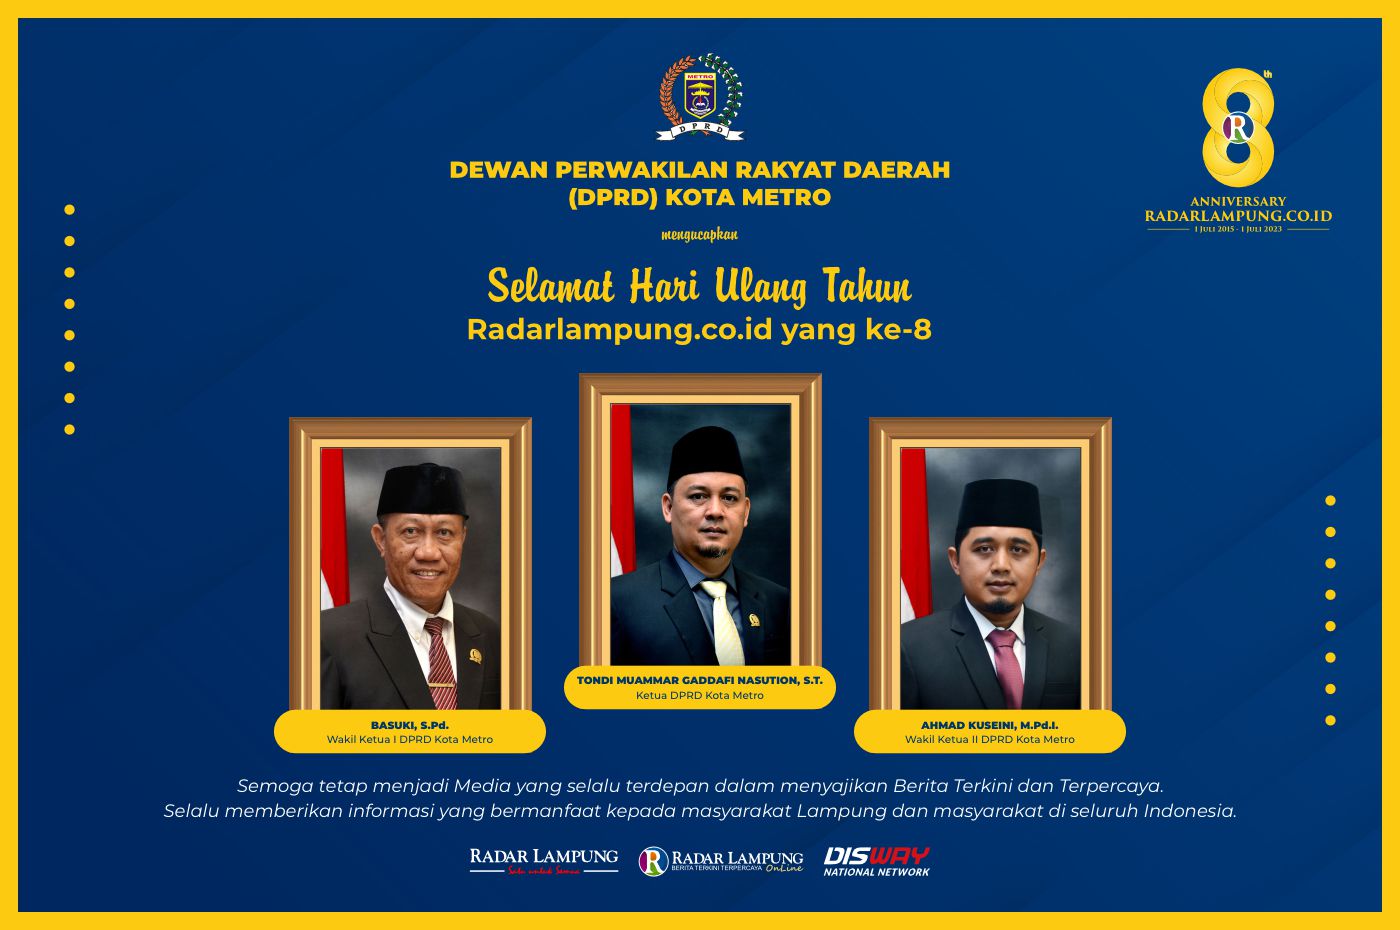 Dewan Perwakilan Rakyat Daerah (DPRD) Kota Metro: Selamat HUT ke-8 Radar Lampung Online